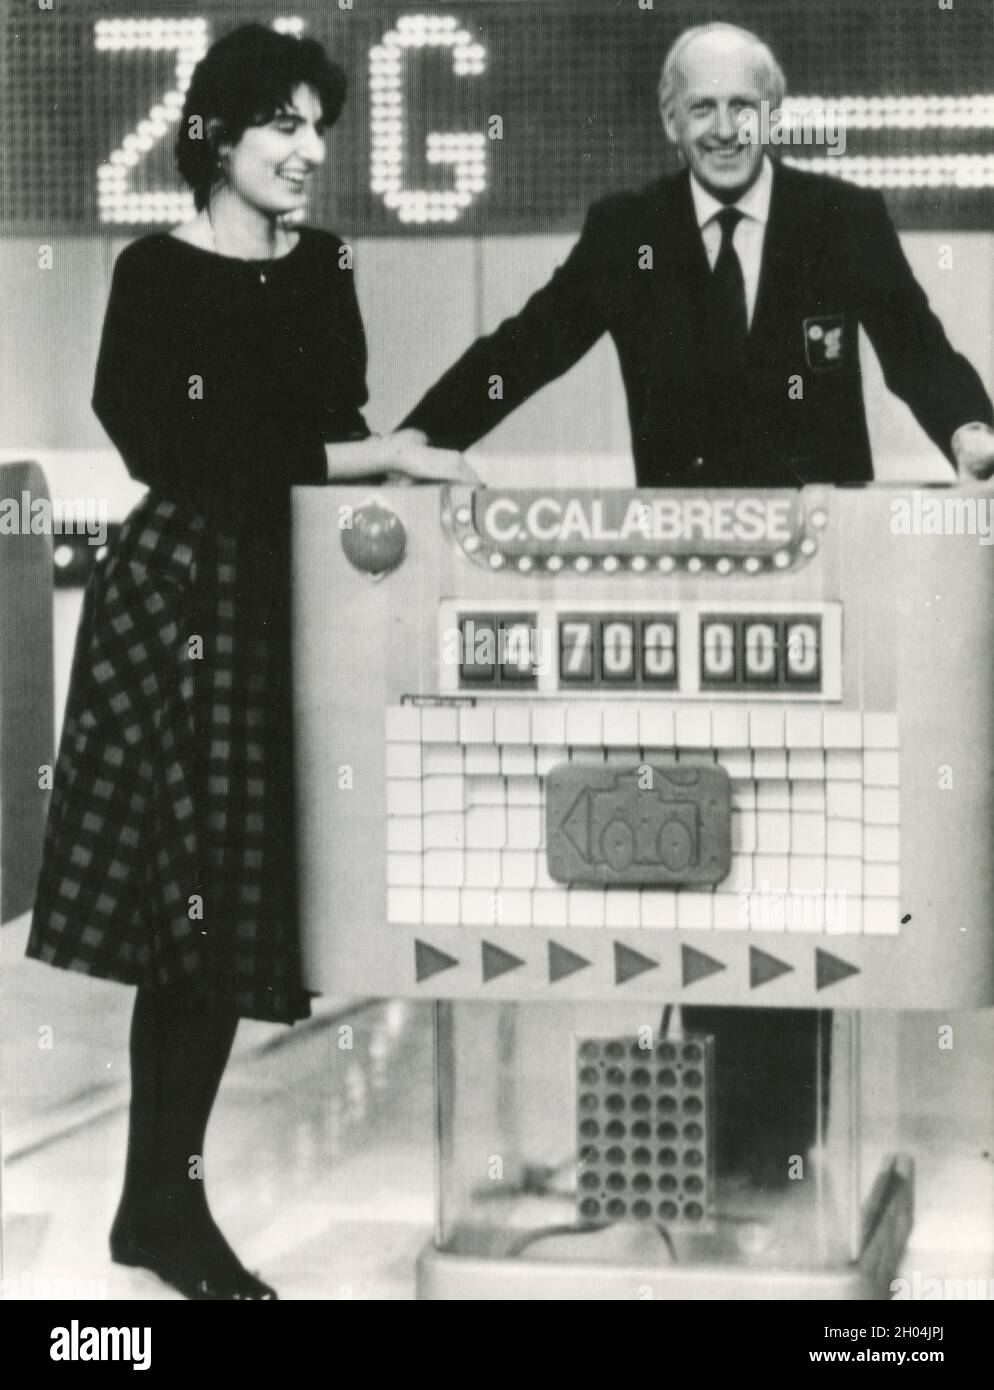 Italian actor and TV host Raimondo Vianello with the winner of the game Cristina Calabrese, 1985 Stock Photo